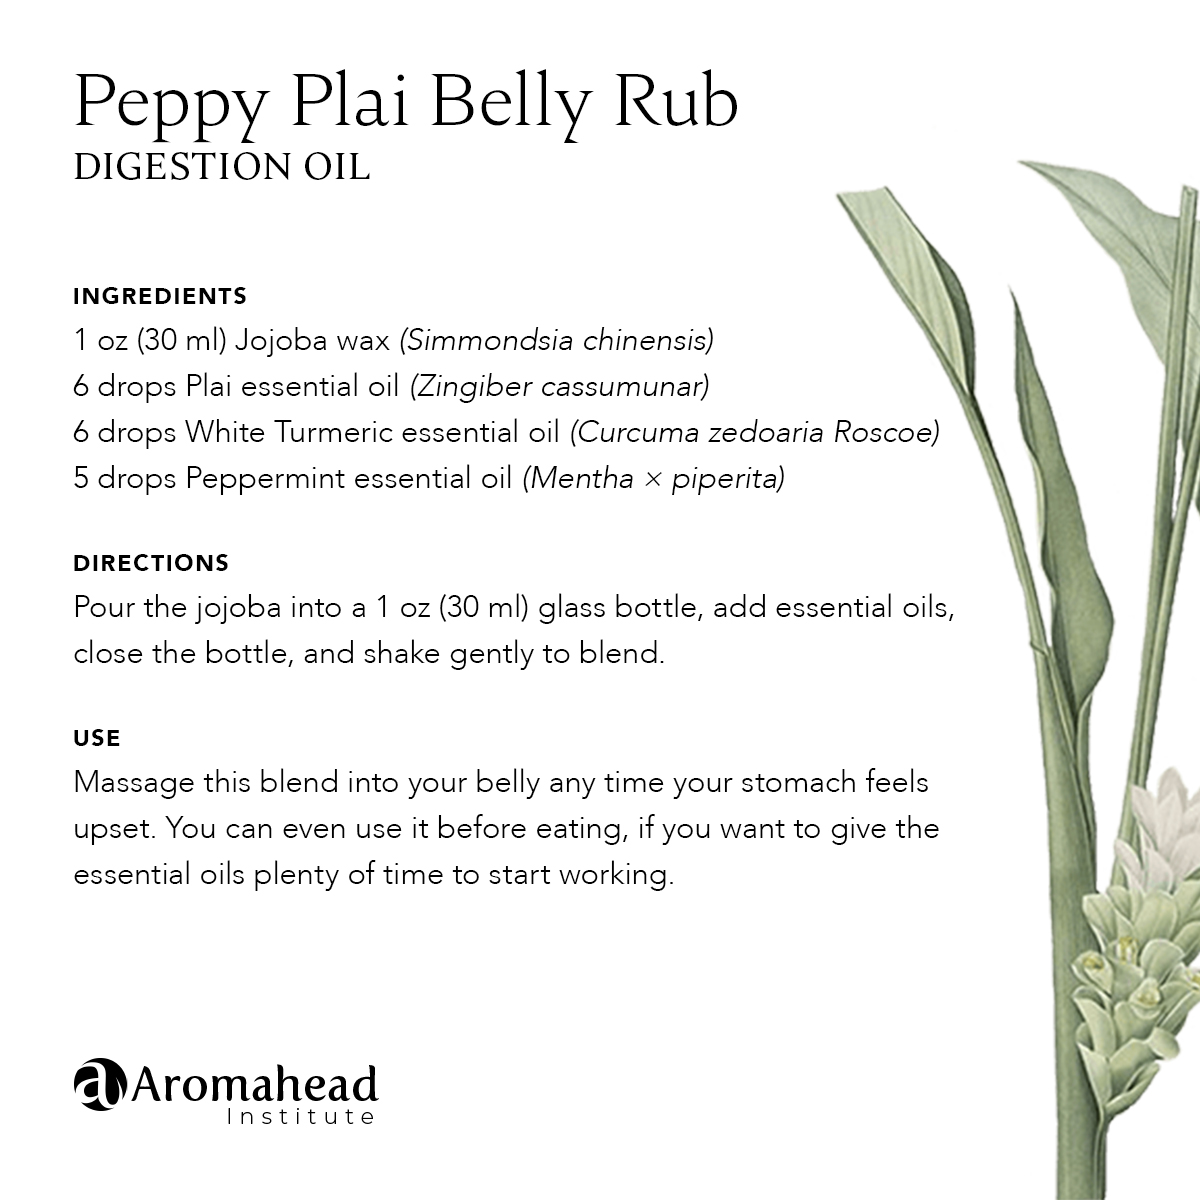 Peppy Plai Belly Rub Digestion Oil Recipe